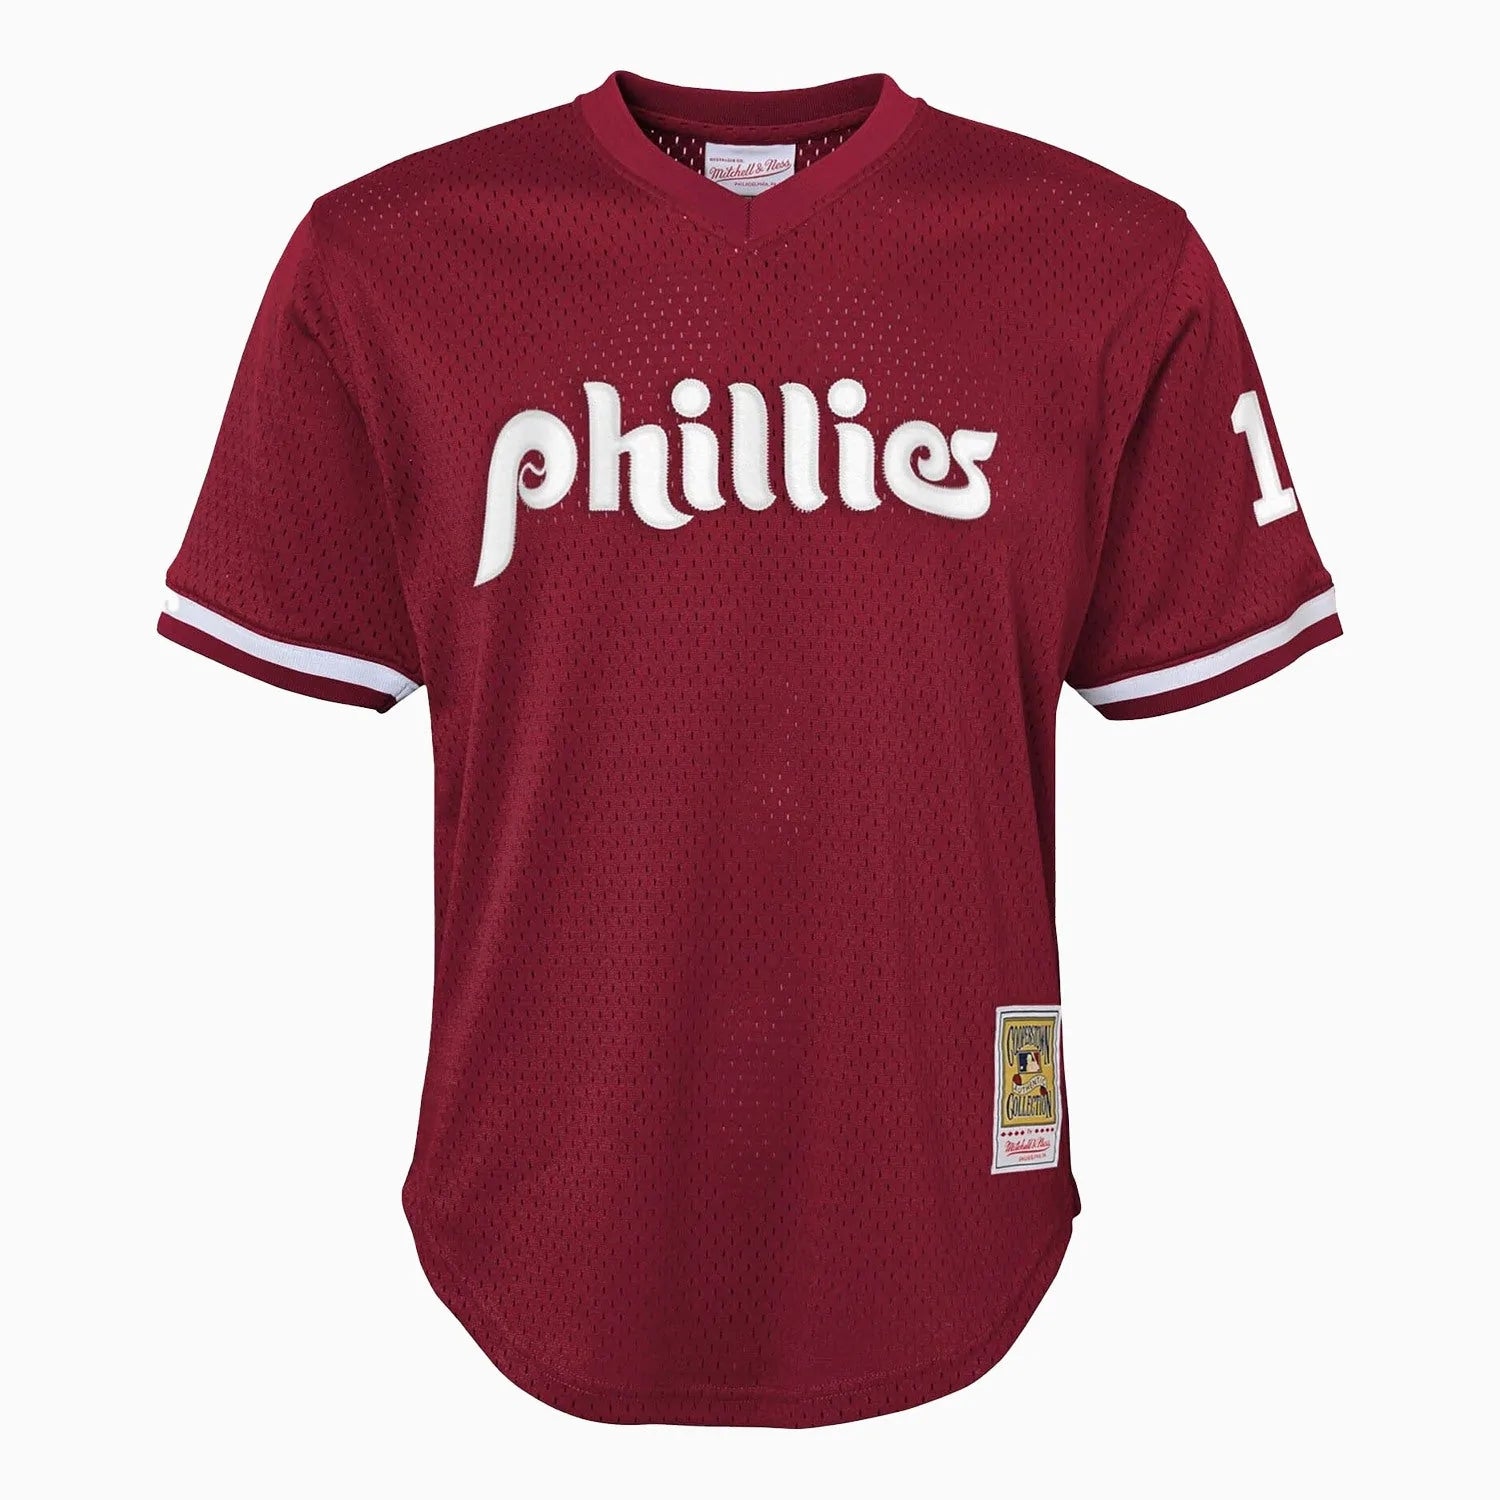 Philadelphia Phillies Baseball Jerseys, Phillies Jerseys, Authentic